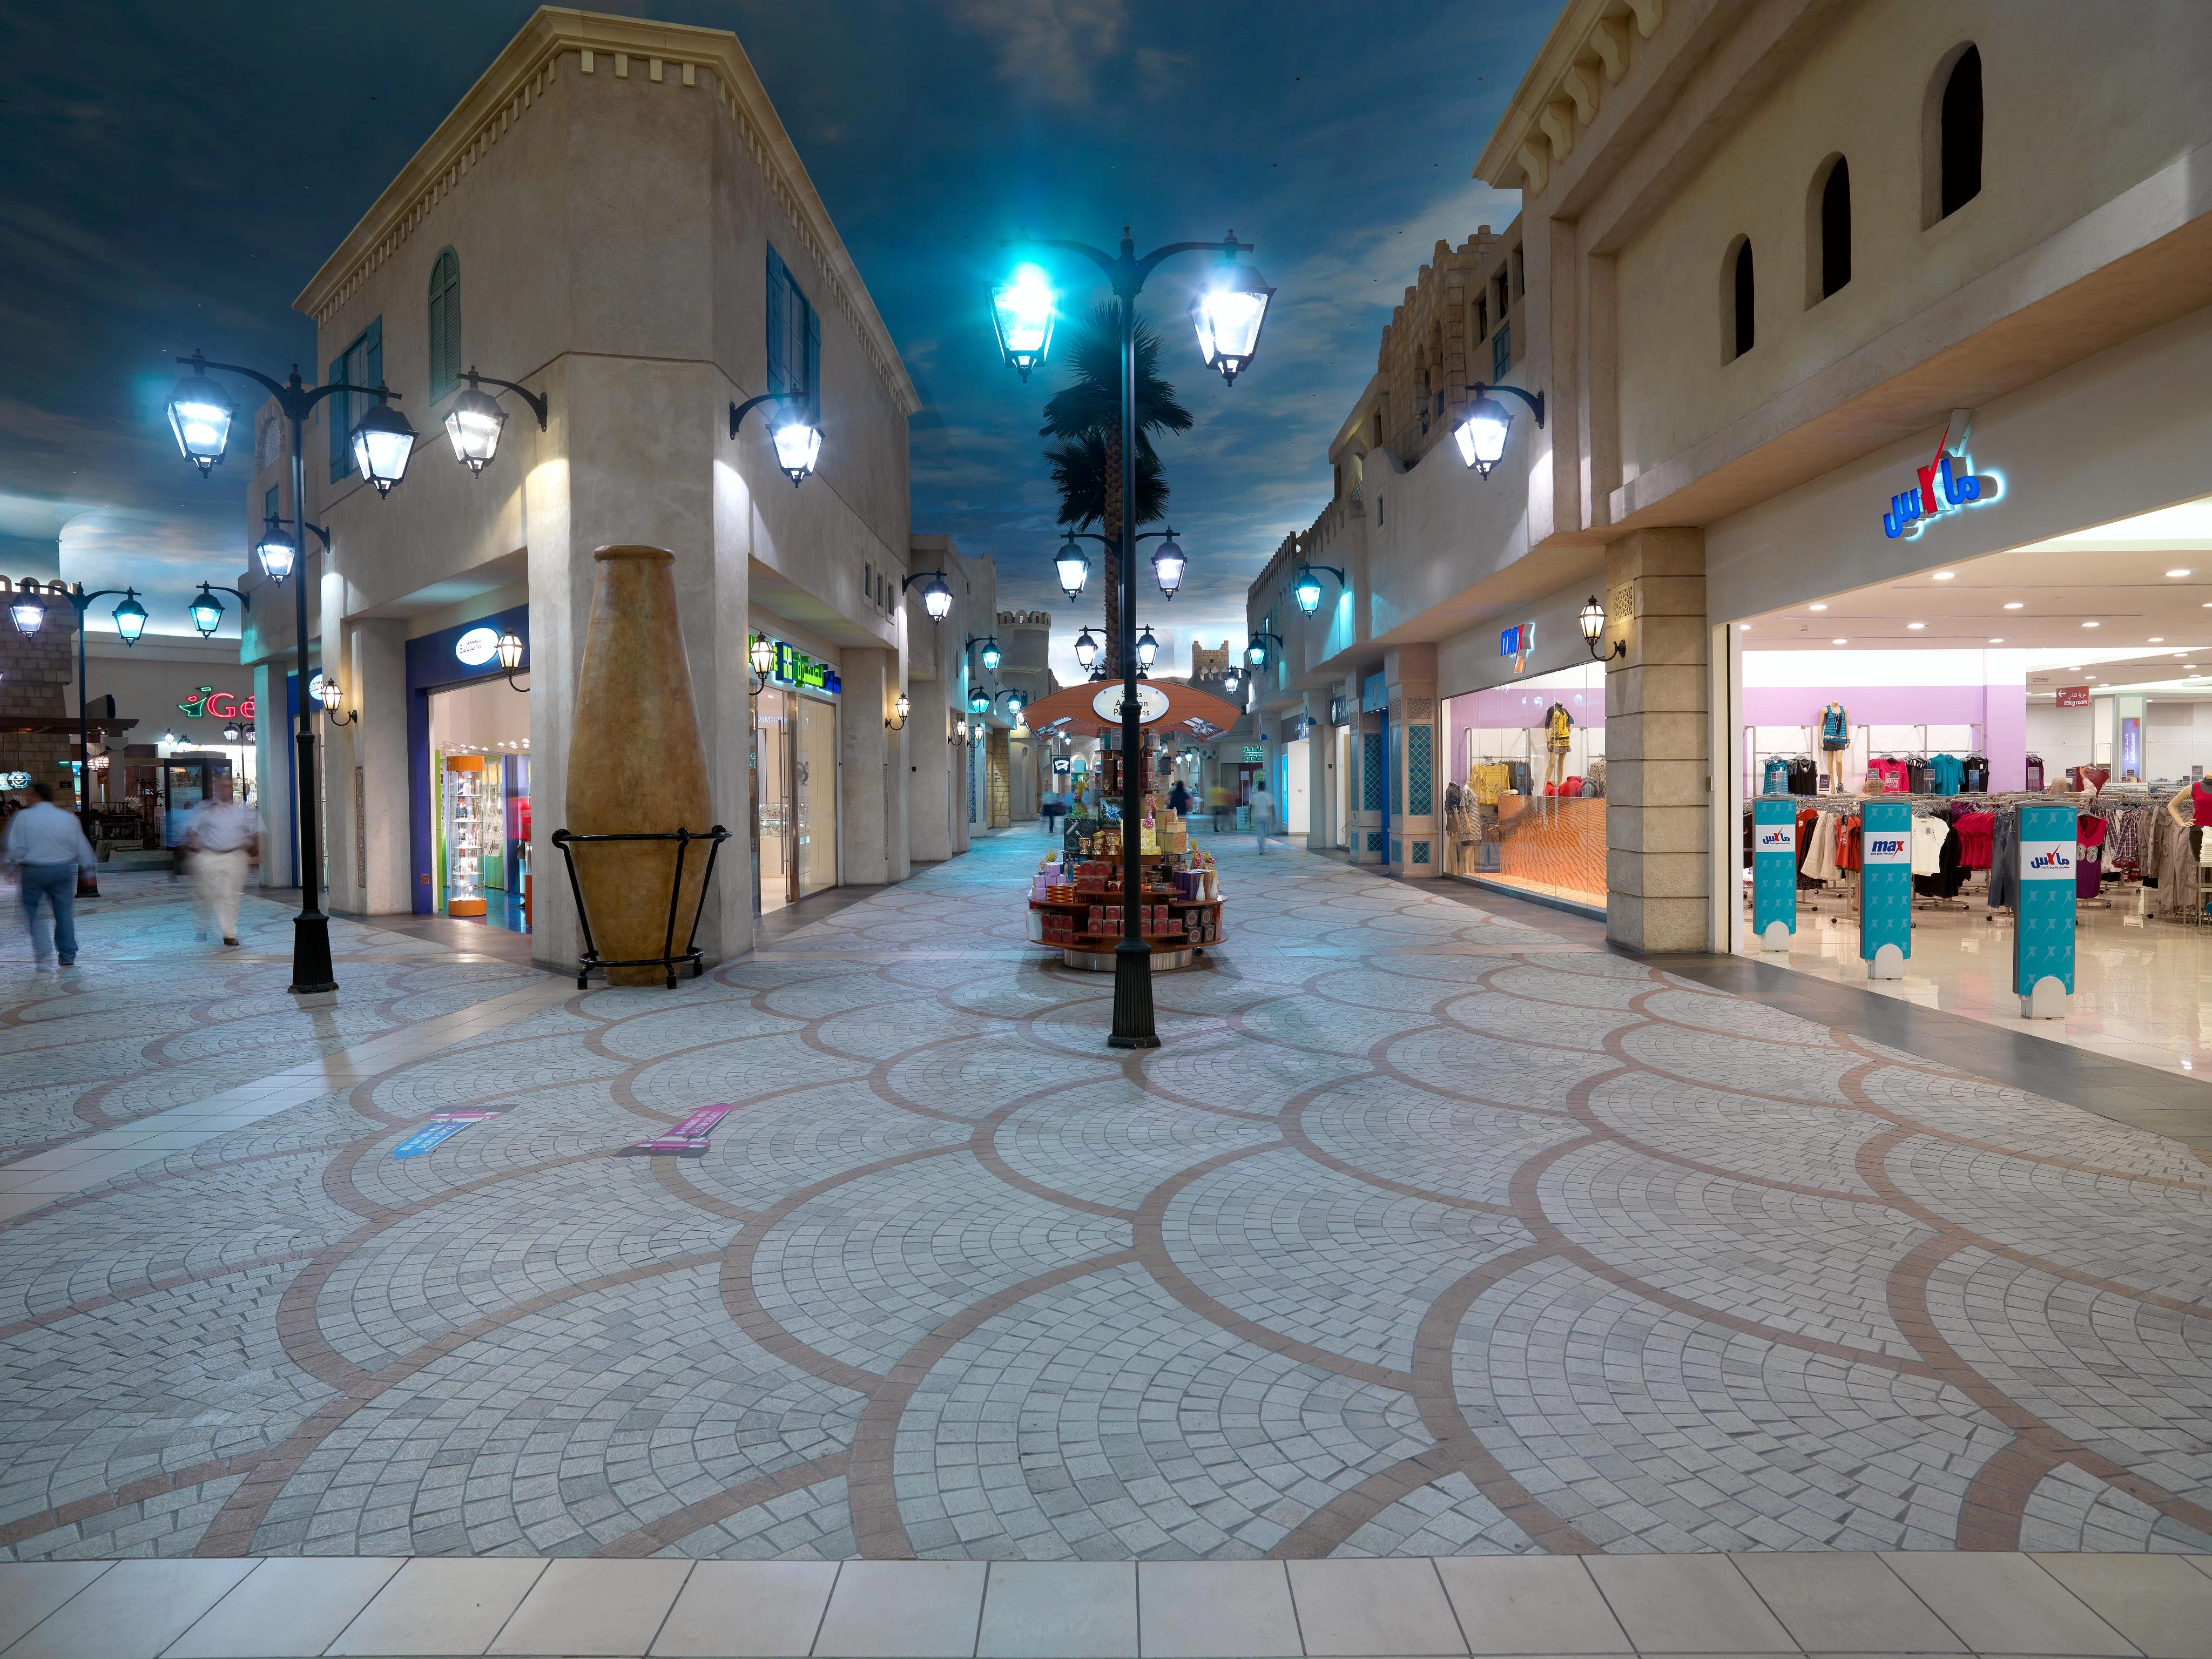 AtlasConcorde IBN Battuta Mall UAE 001